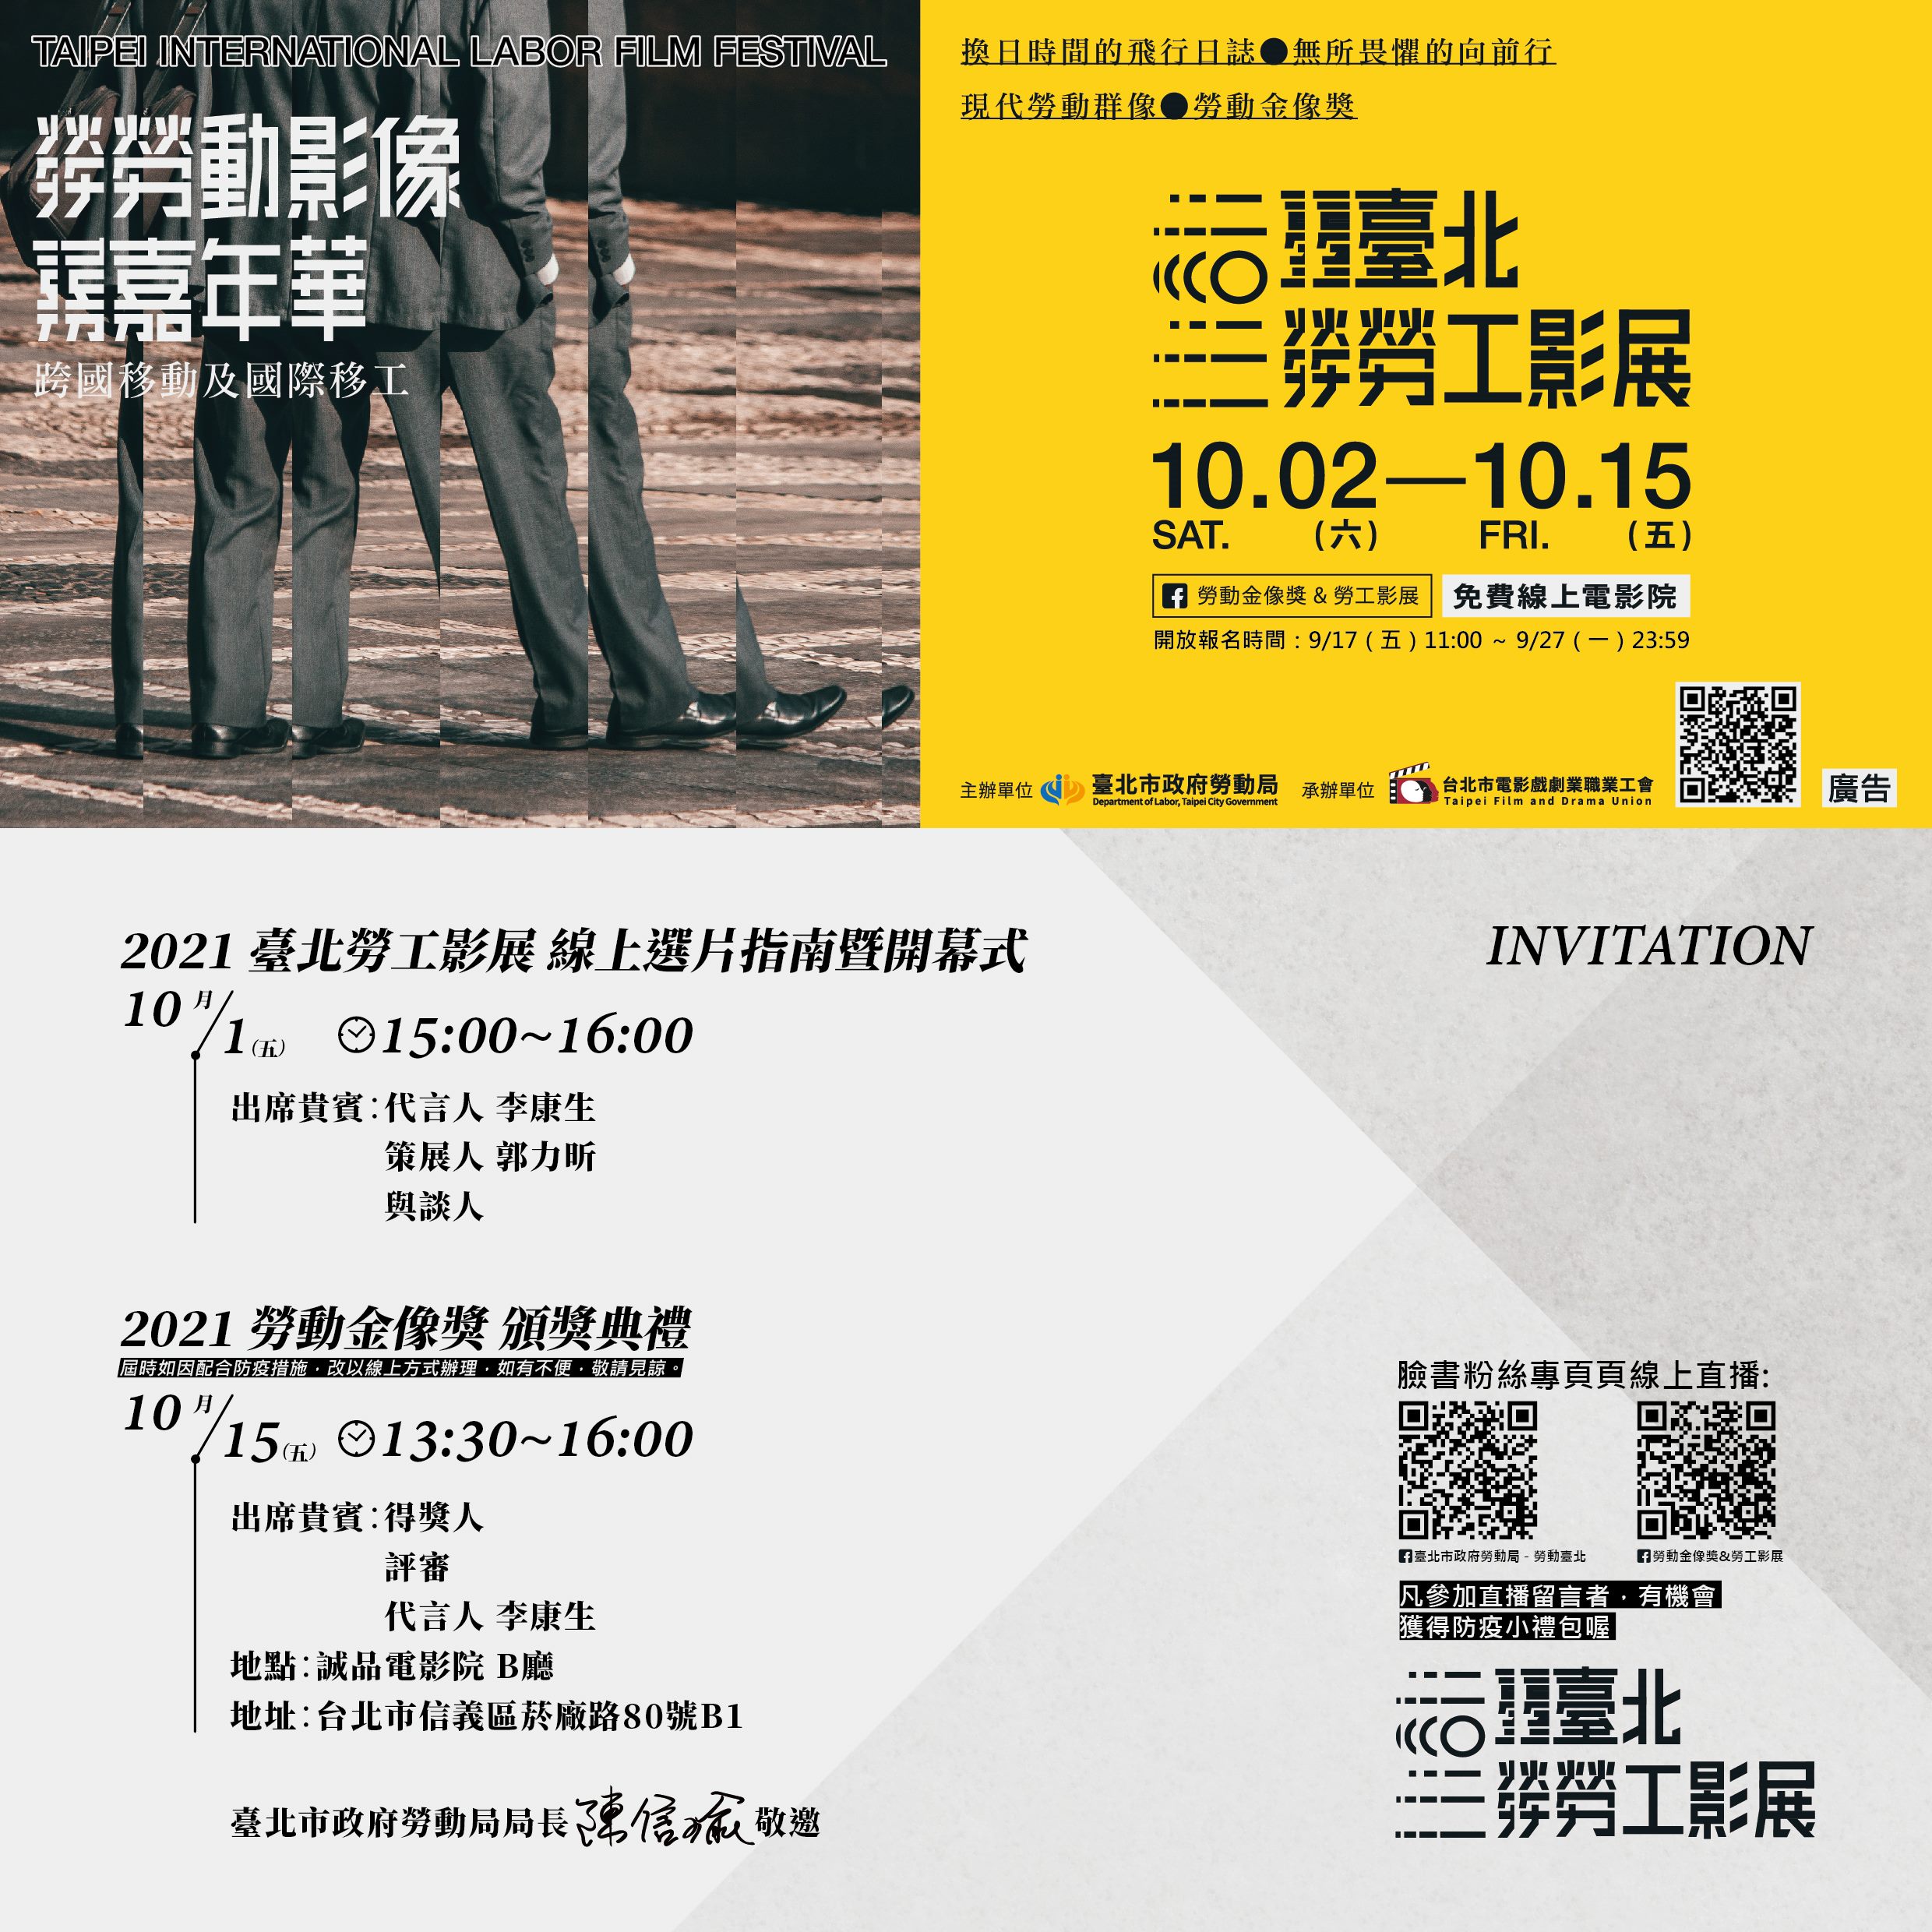 Festival film melihat "pekerja migran transnasional" berjuang di negara asing. Sumber: Diambil dari Biro Tenaga Kerja Kota Taipei